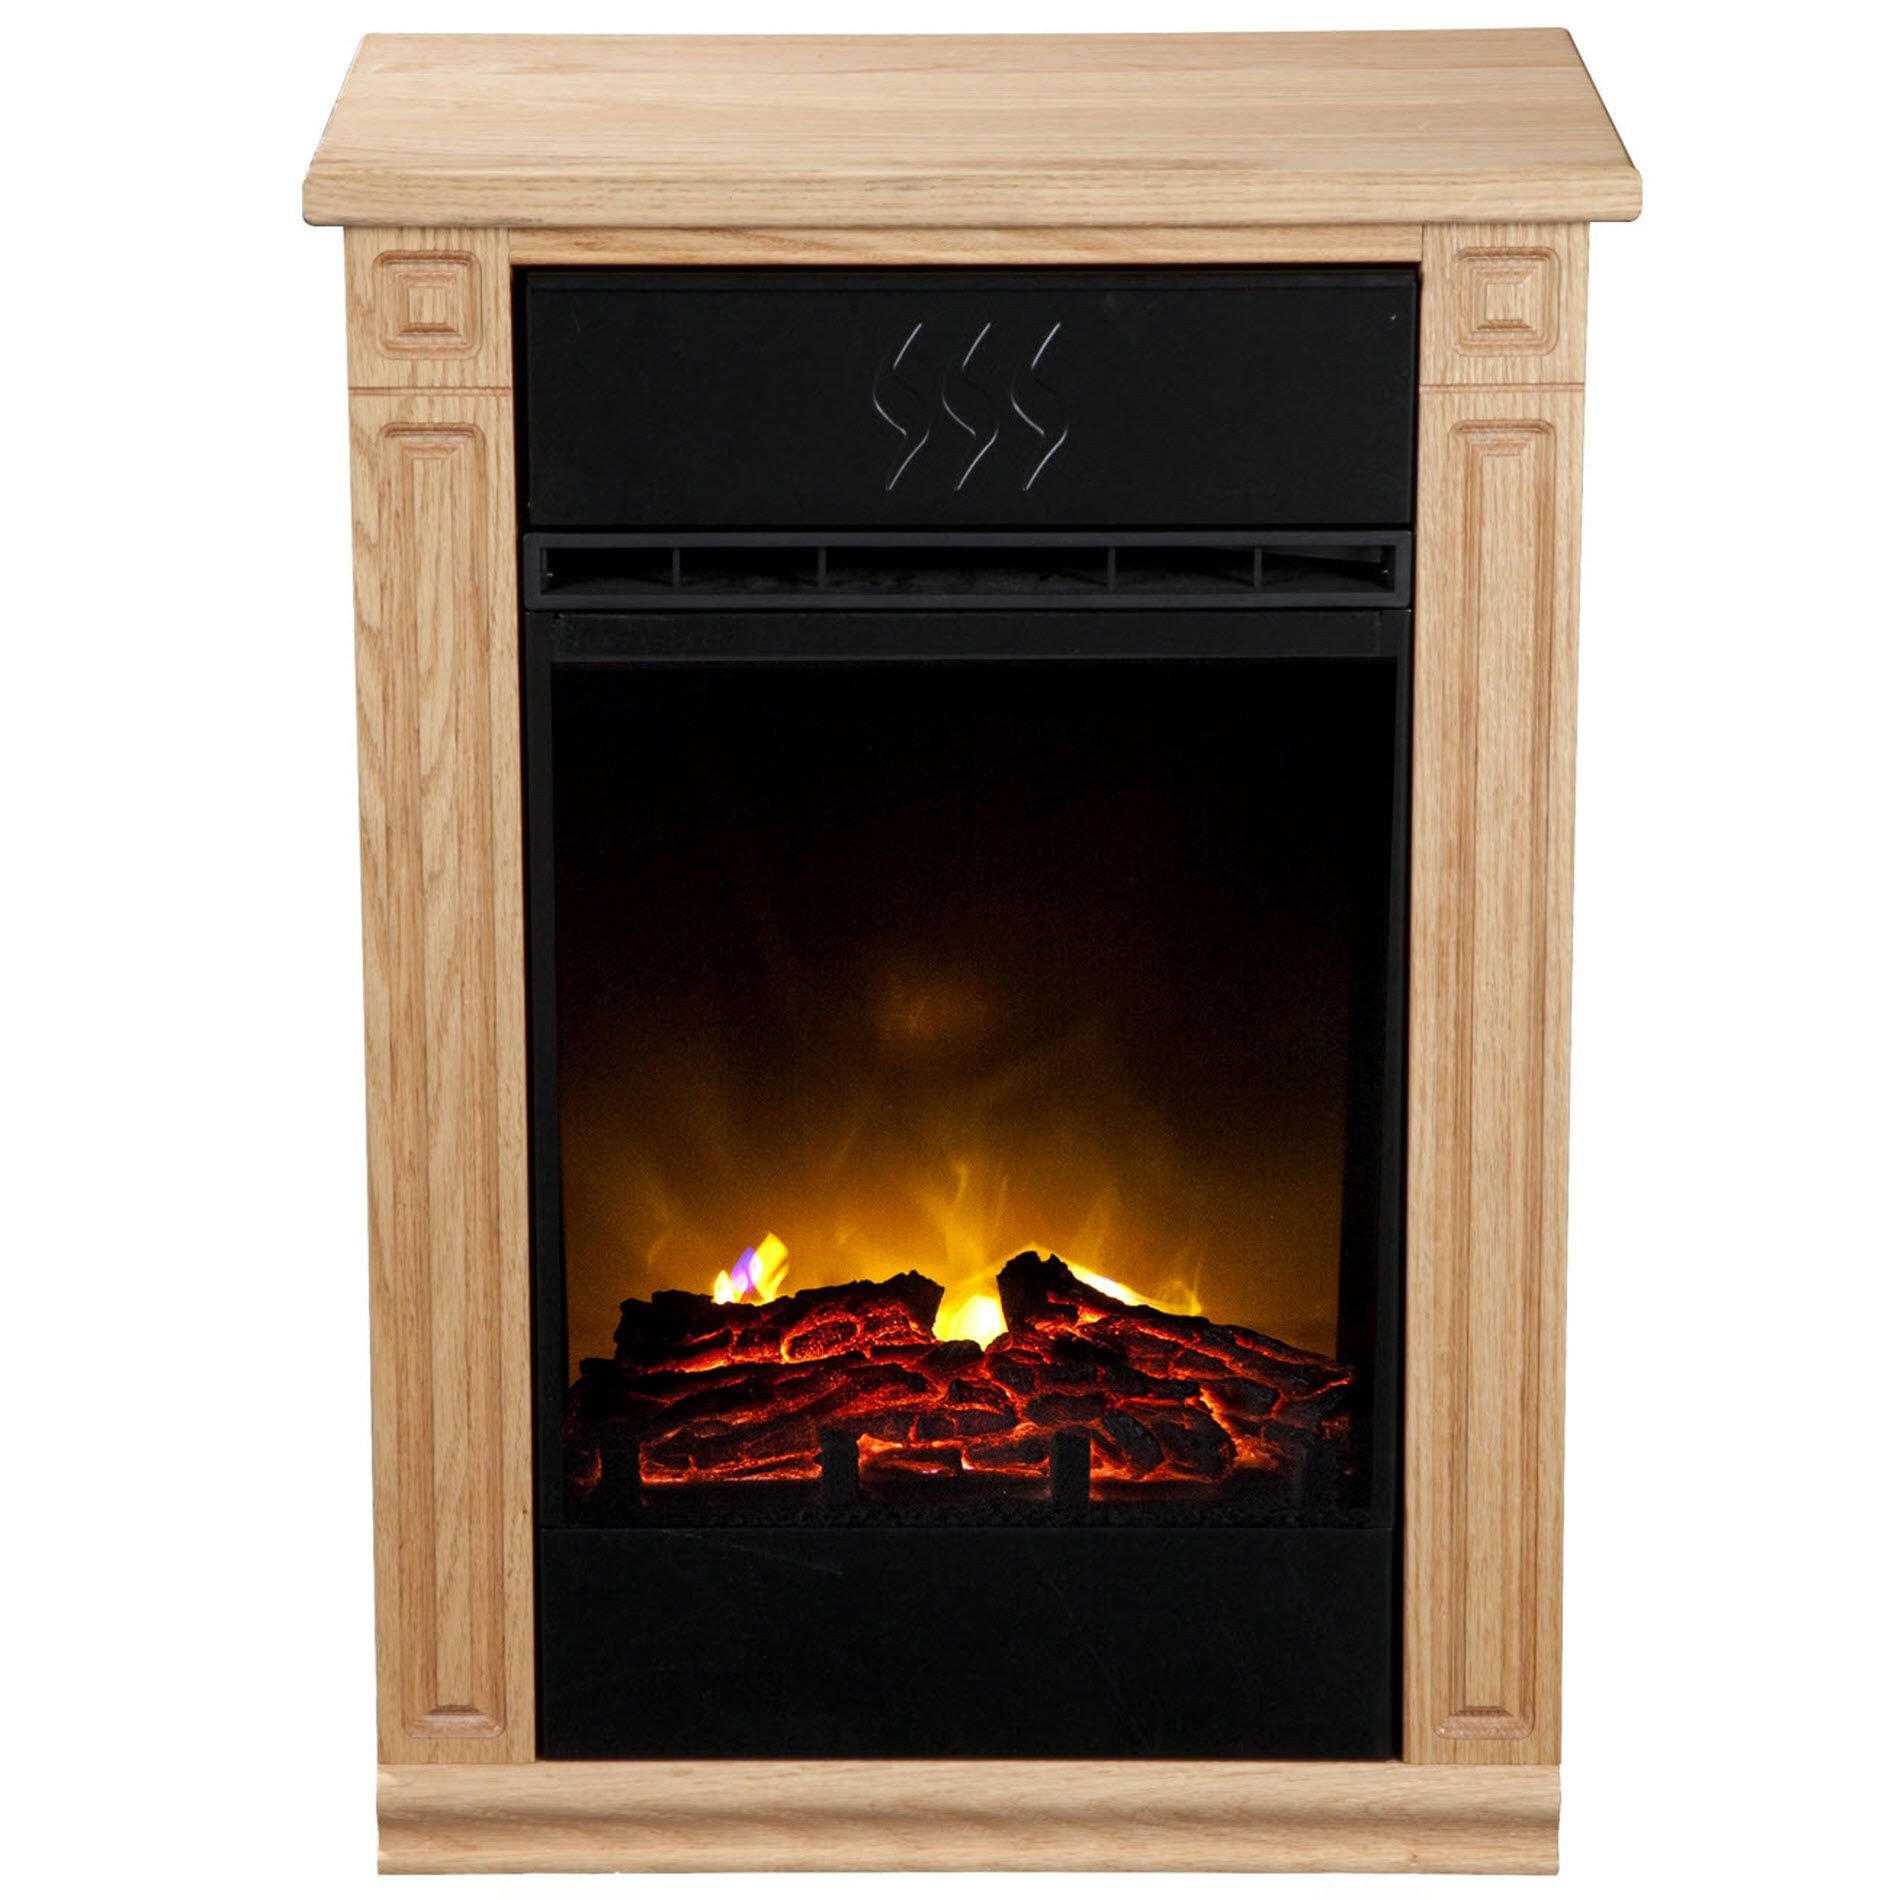 Best ideas about Heat Surge Electric Fireplace
. Save or Pin Heat Surge Accent Electric Fireplace Light Oak Home Now.